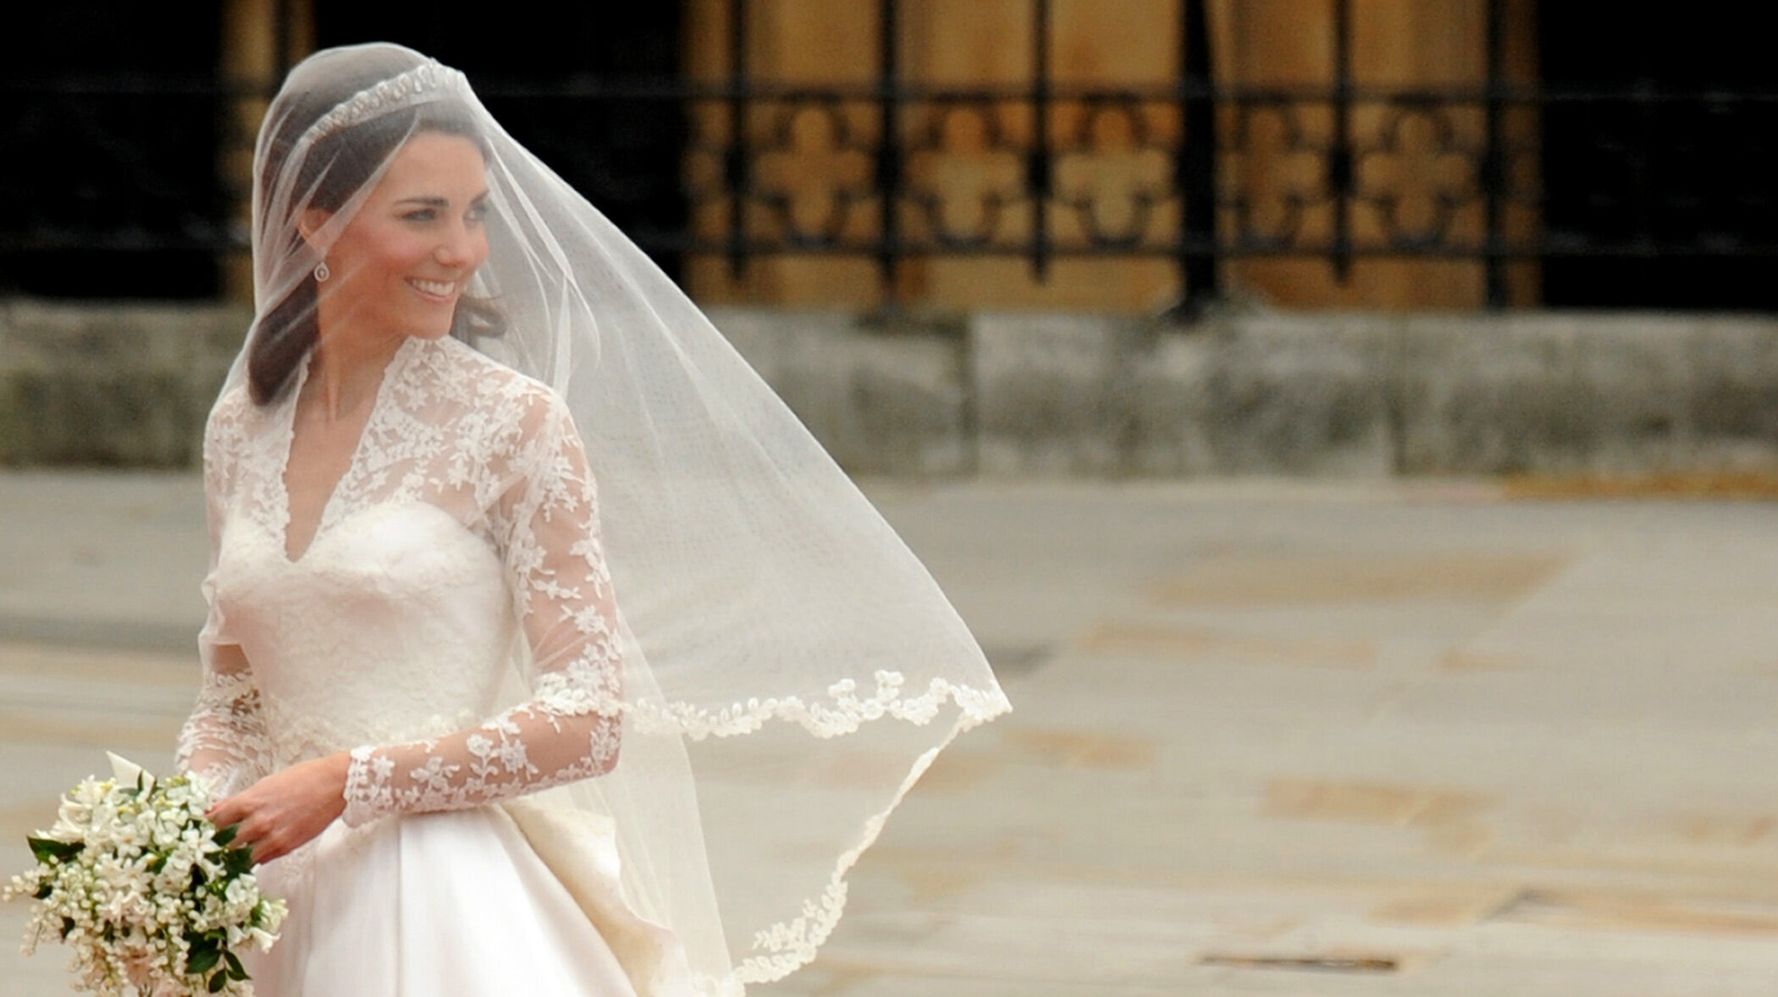 Sophie Turner's Wedding Dress Is Finally Revealed: Get the Details